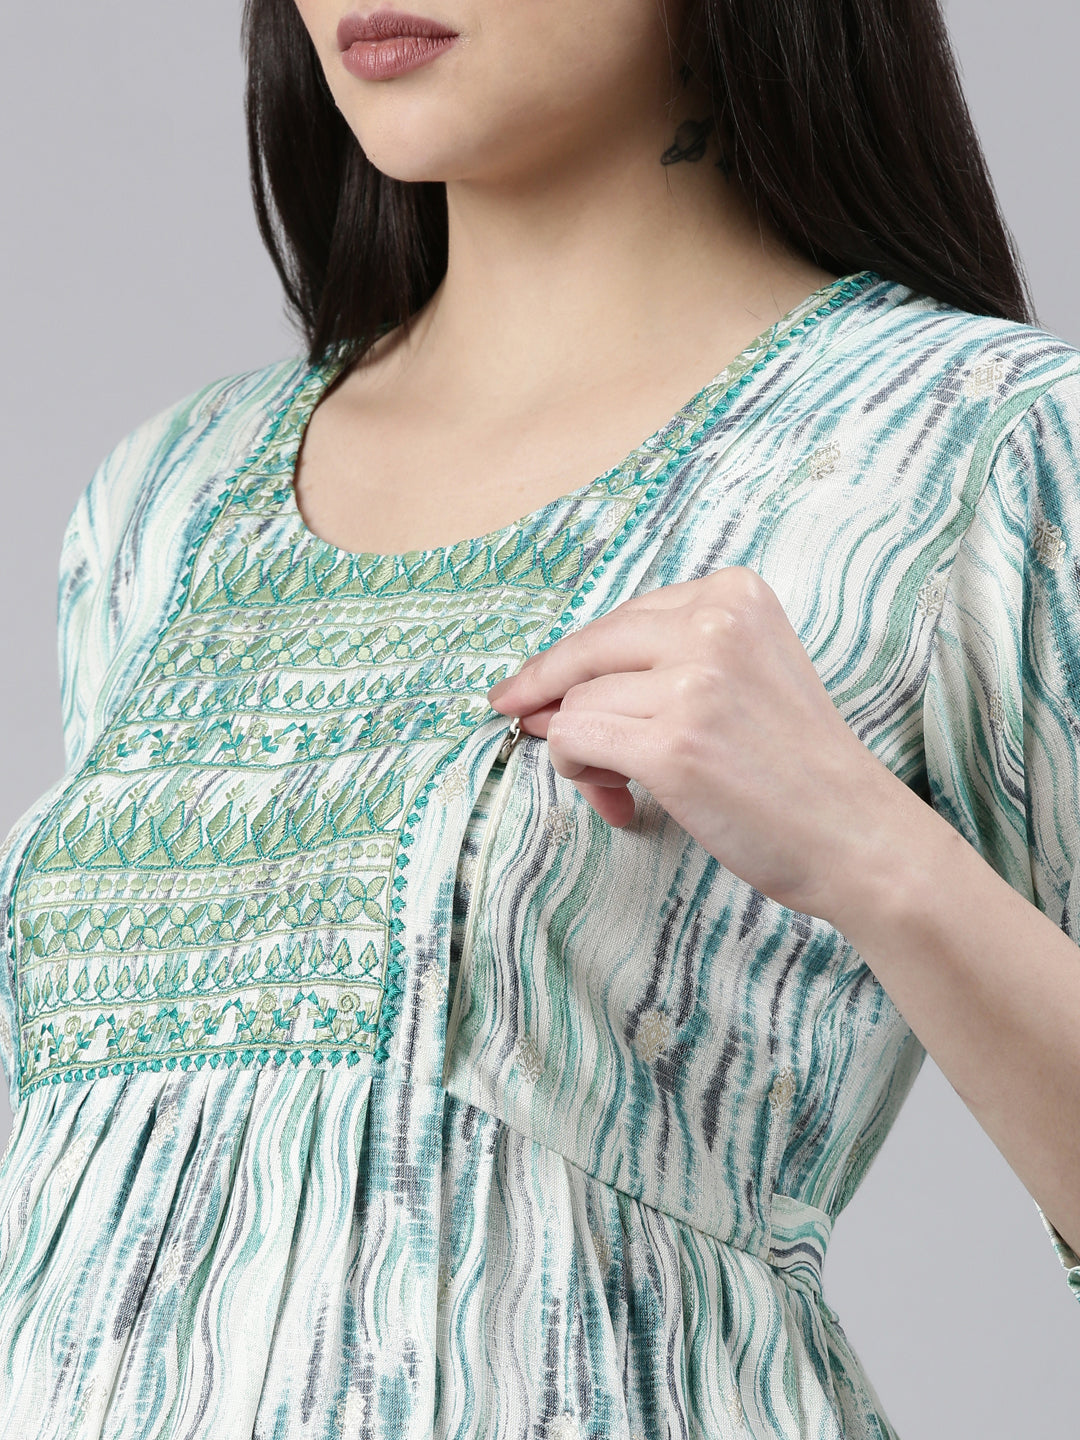 Breastfeeding Maxi Dress with zip access - idea | Breastfeeding dress,  Breastfeeding fashion outfits, Breastfeeding fashion